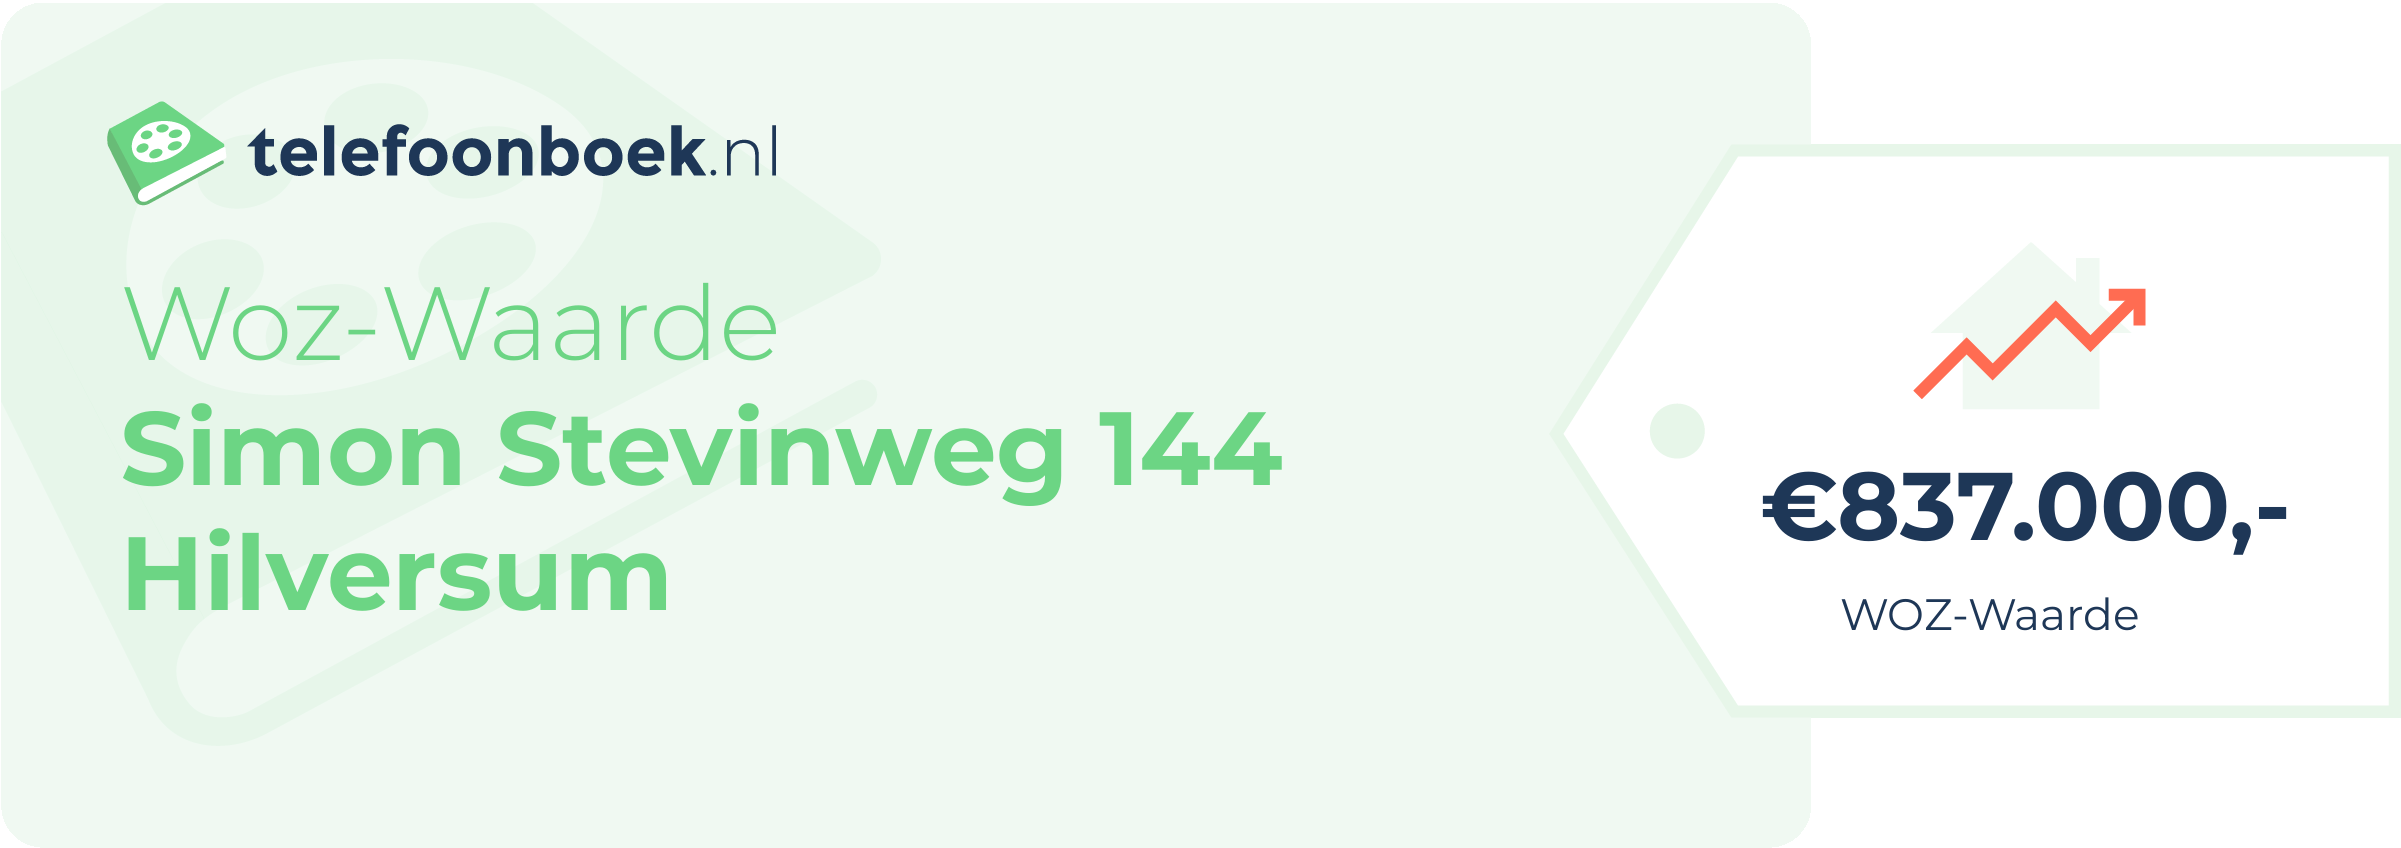 WOZ-waarde Simon Stevinweg 144 Hilversum